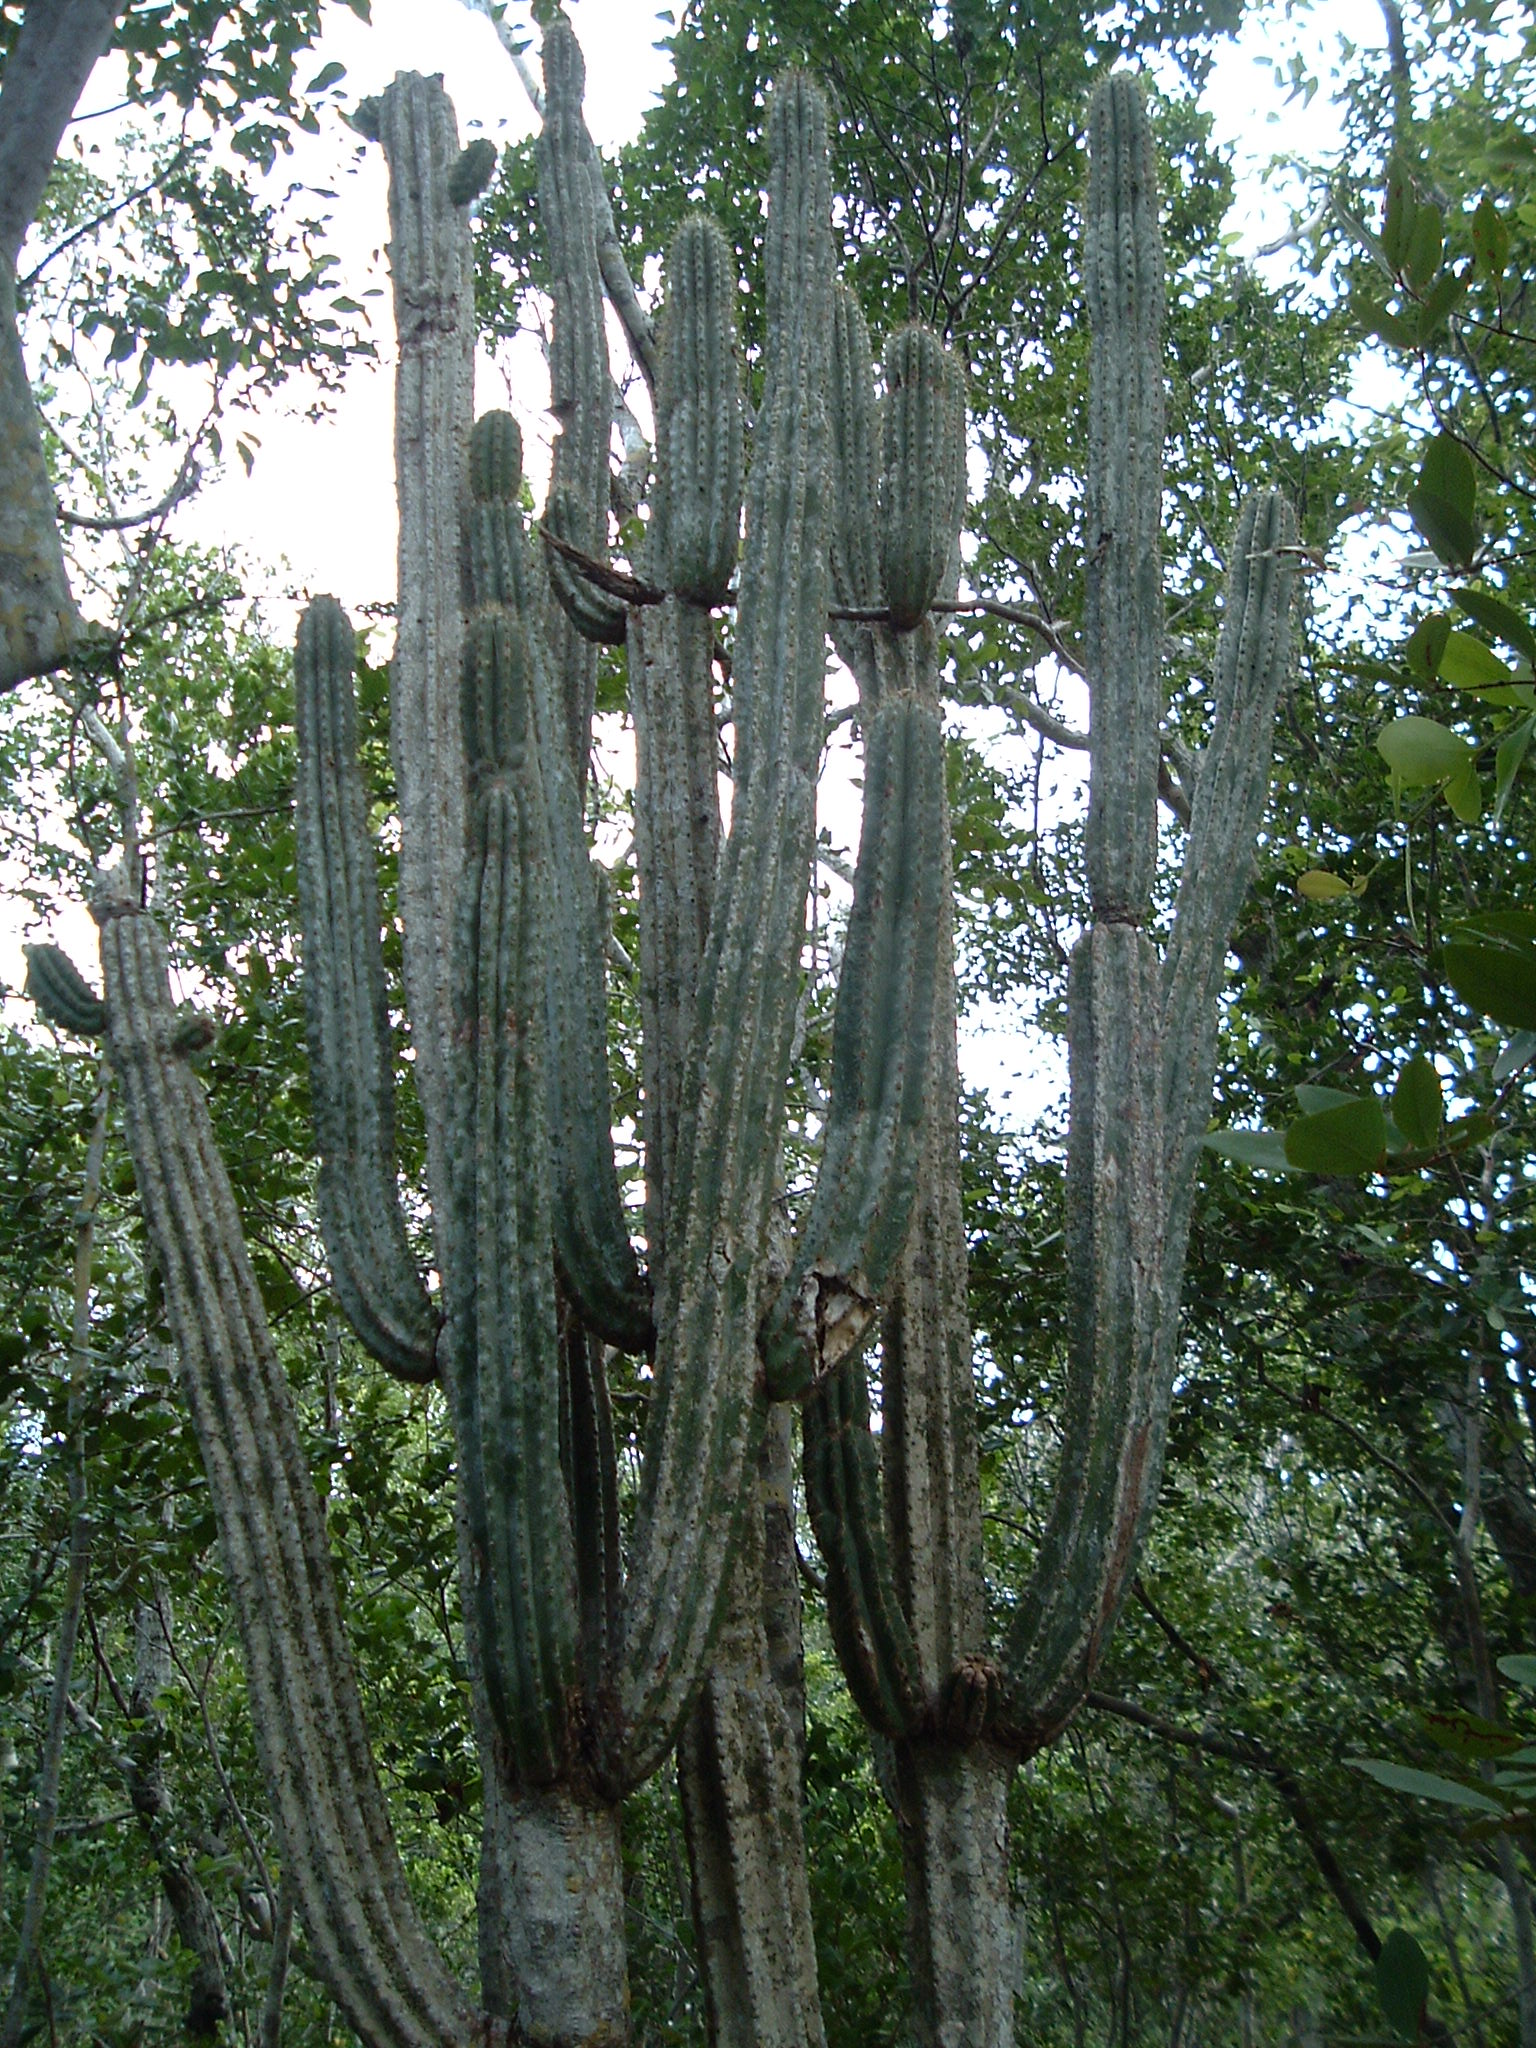 Image of tall, multi-stemmed cactus.